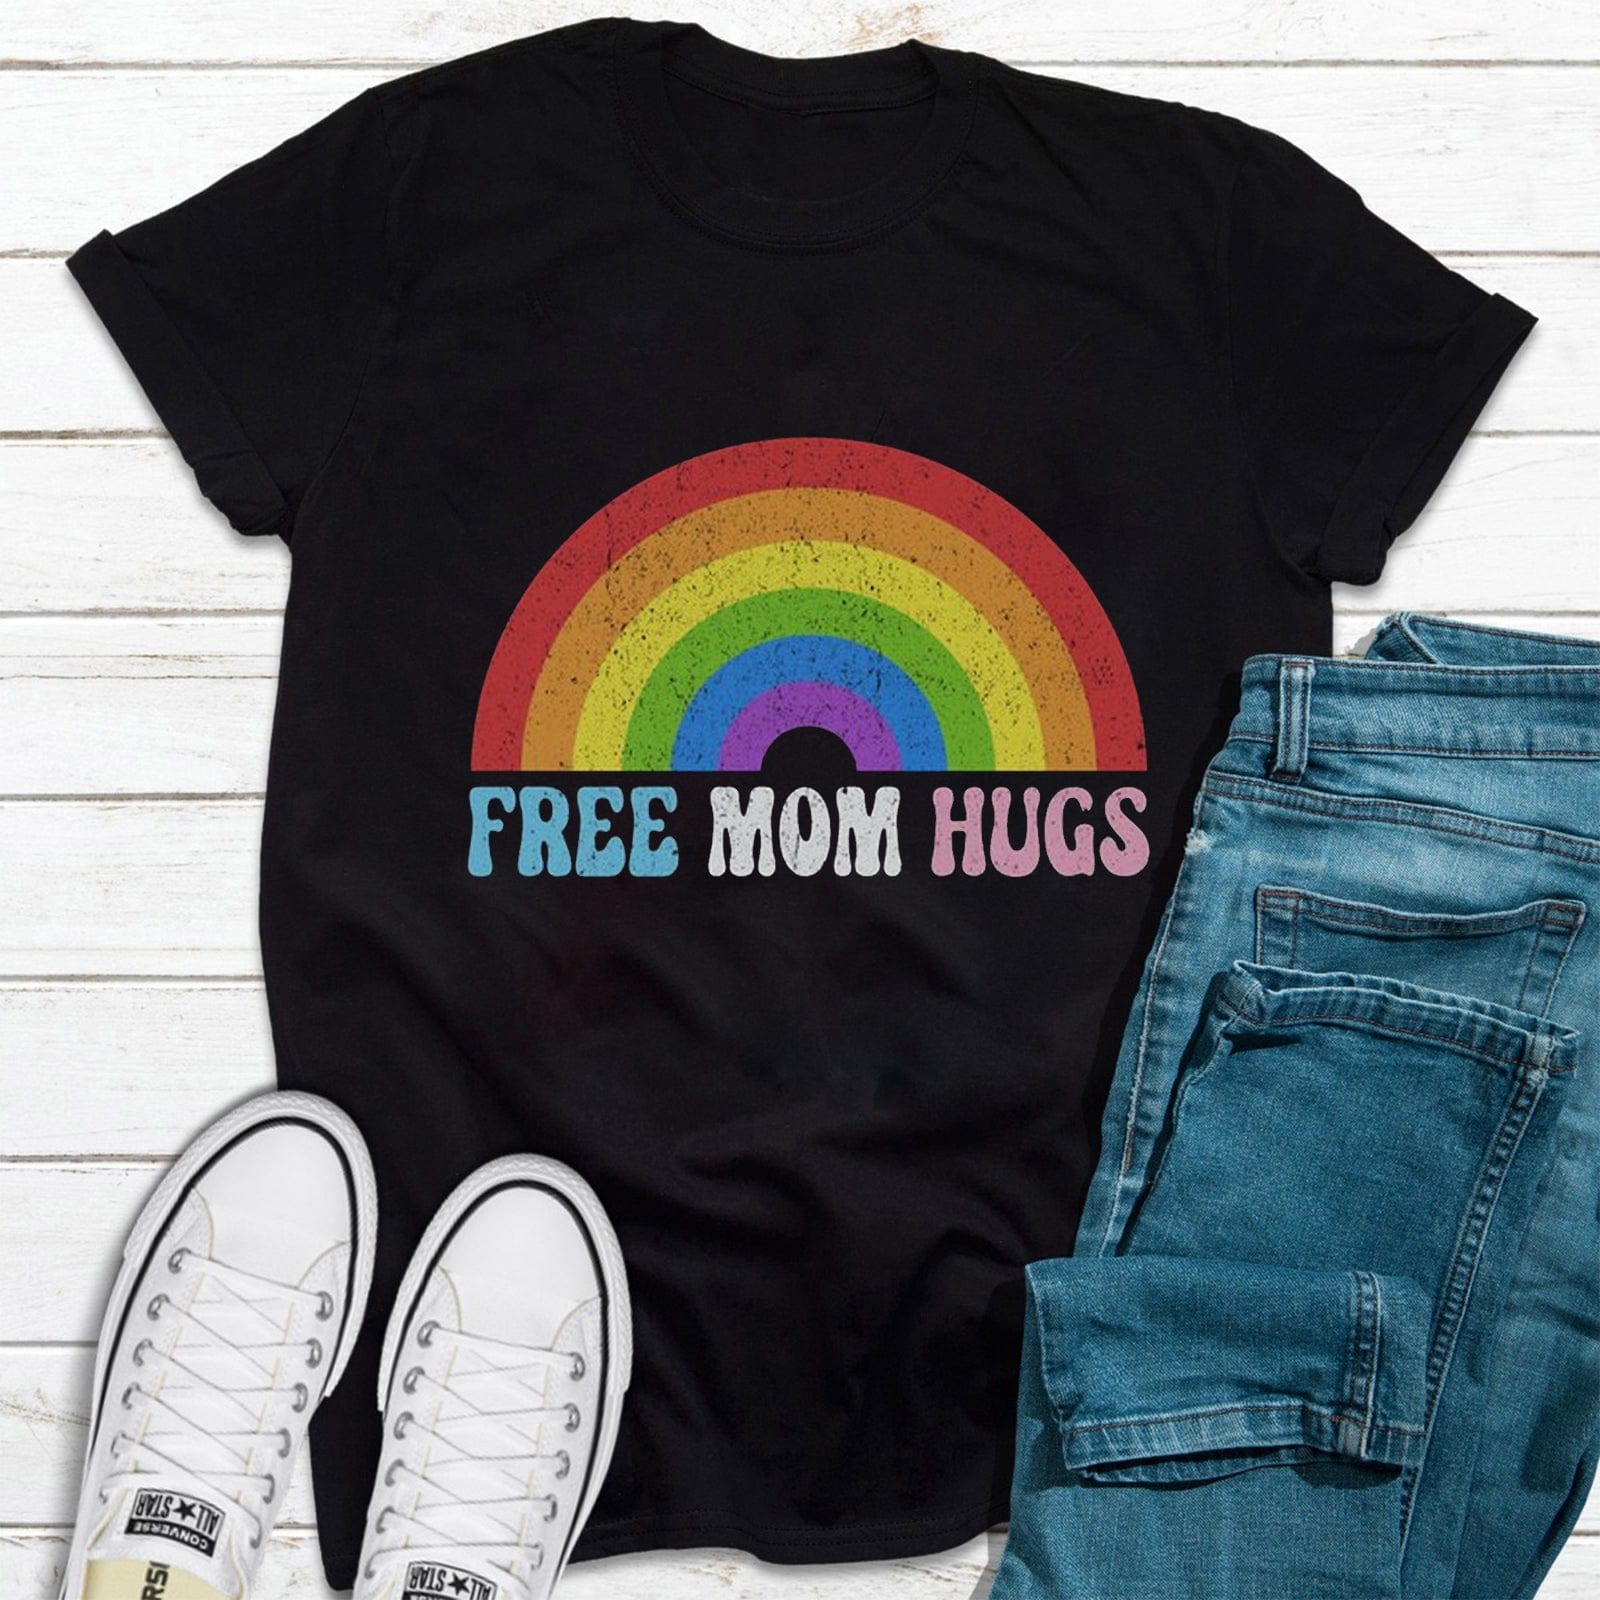 Free Mom Hugs Transgender LGBT Shirt, Rainbow Pride Tee